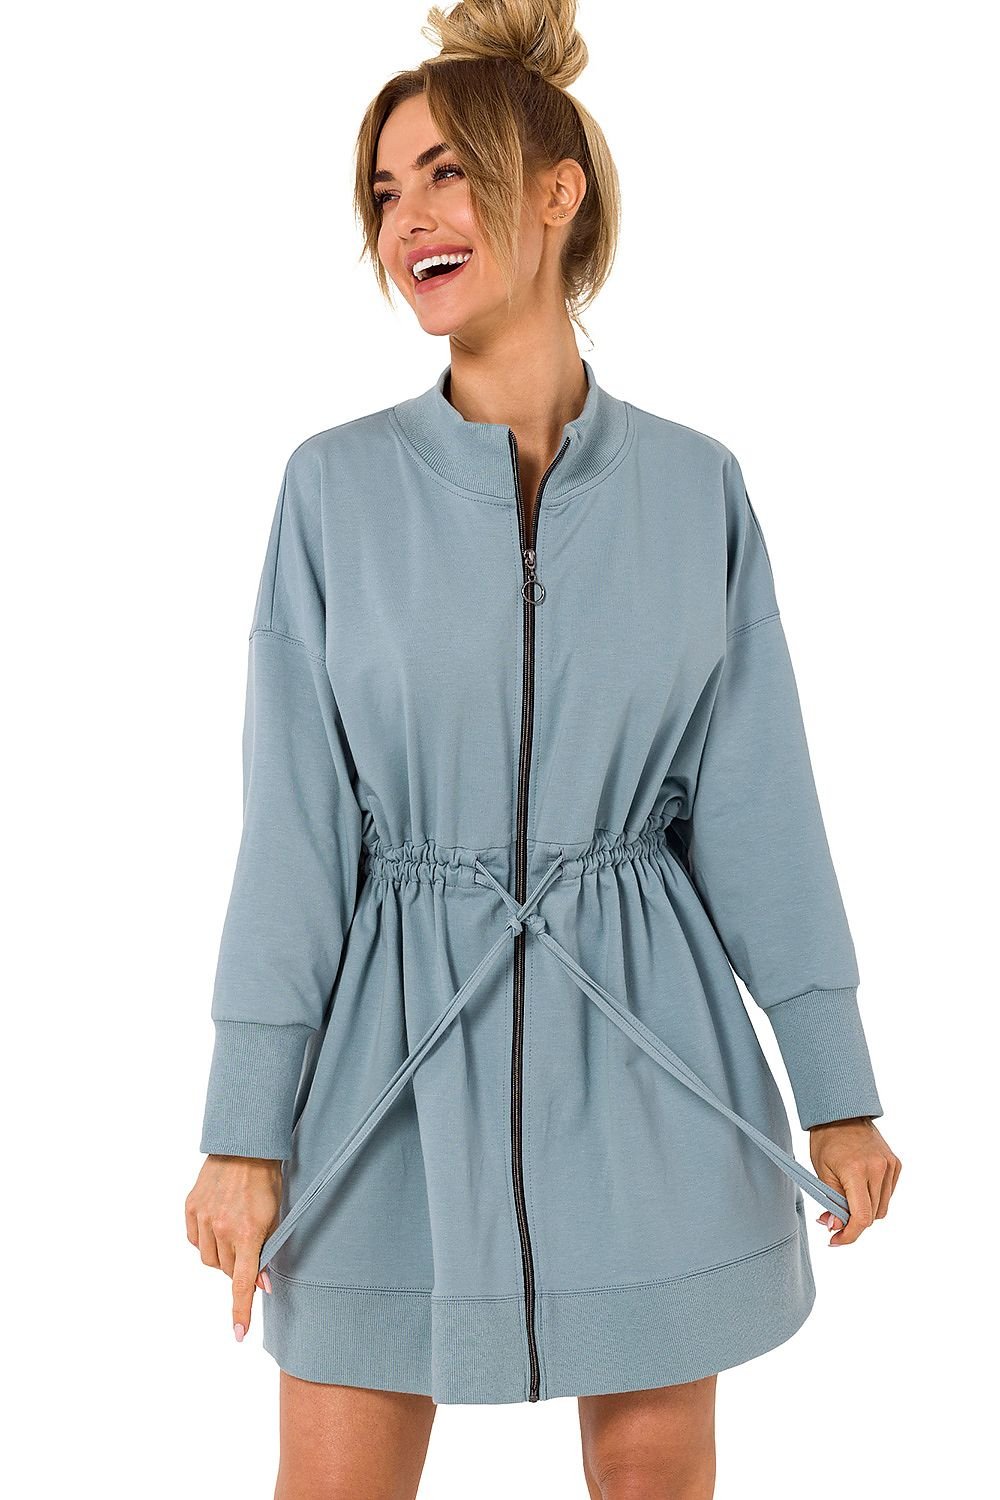 TEEK - Zip Sweatshirt Lace Back Dress DRESS TEEK MH grey moss 2XL/3XL 